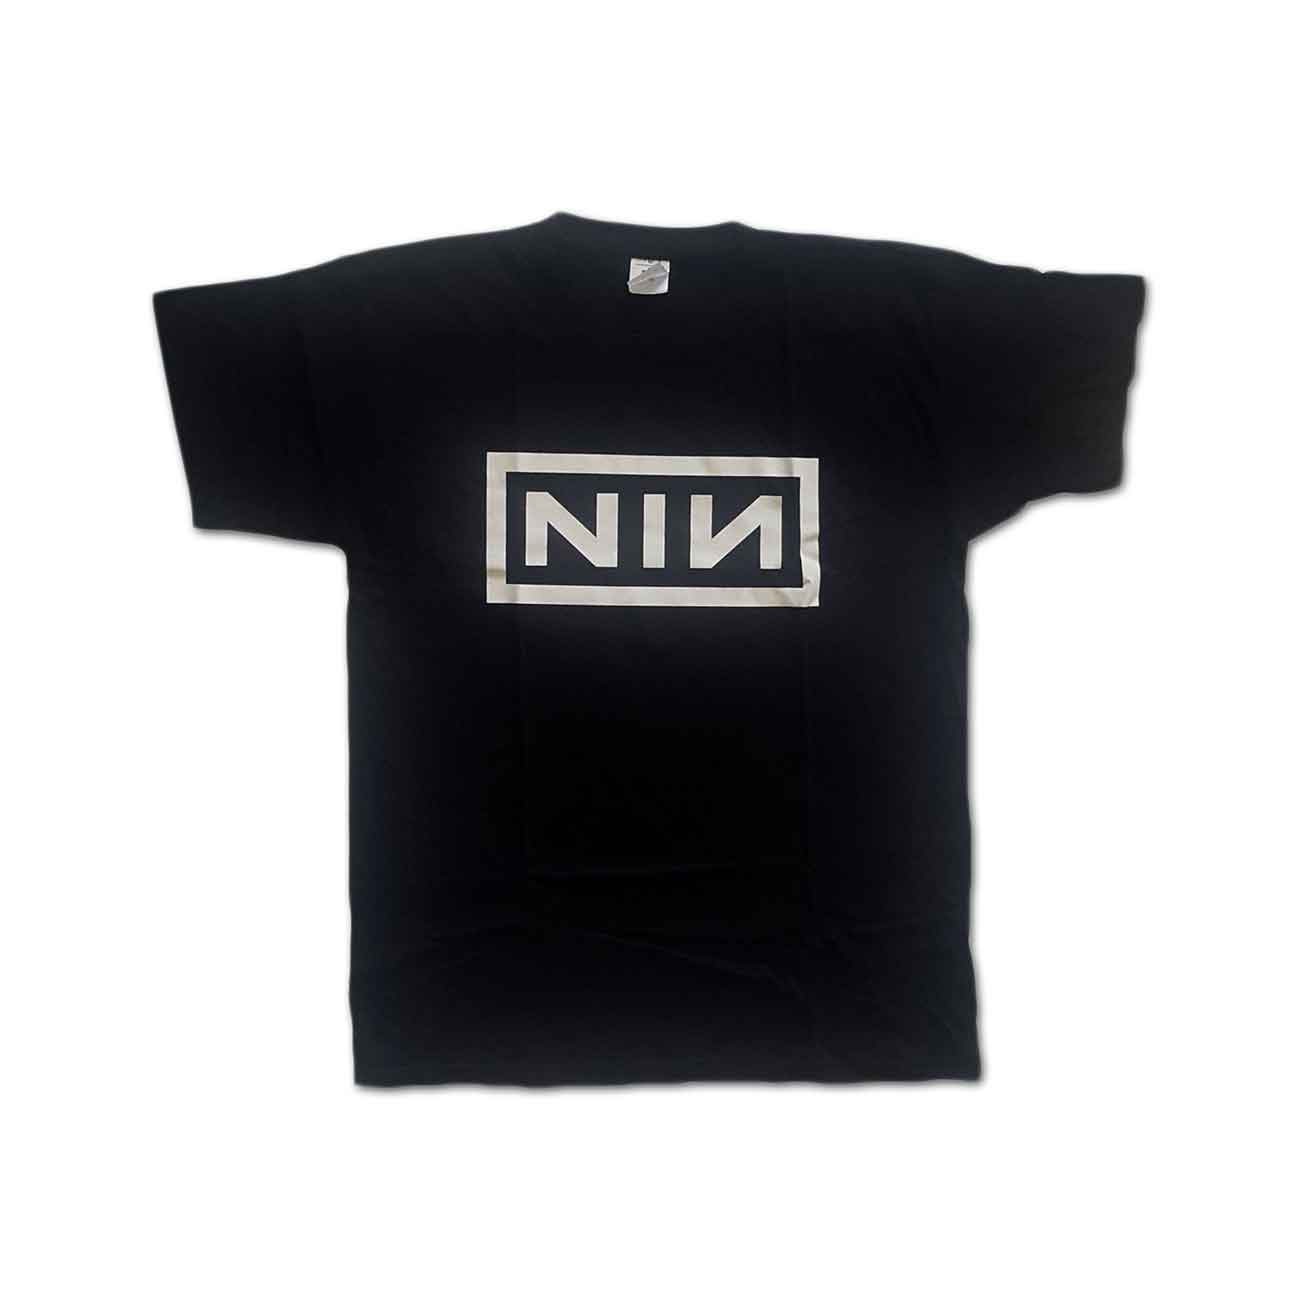 Nine Inch Nails ナインインチネイルズ バンド tシャツ 新品 L